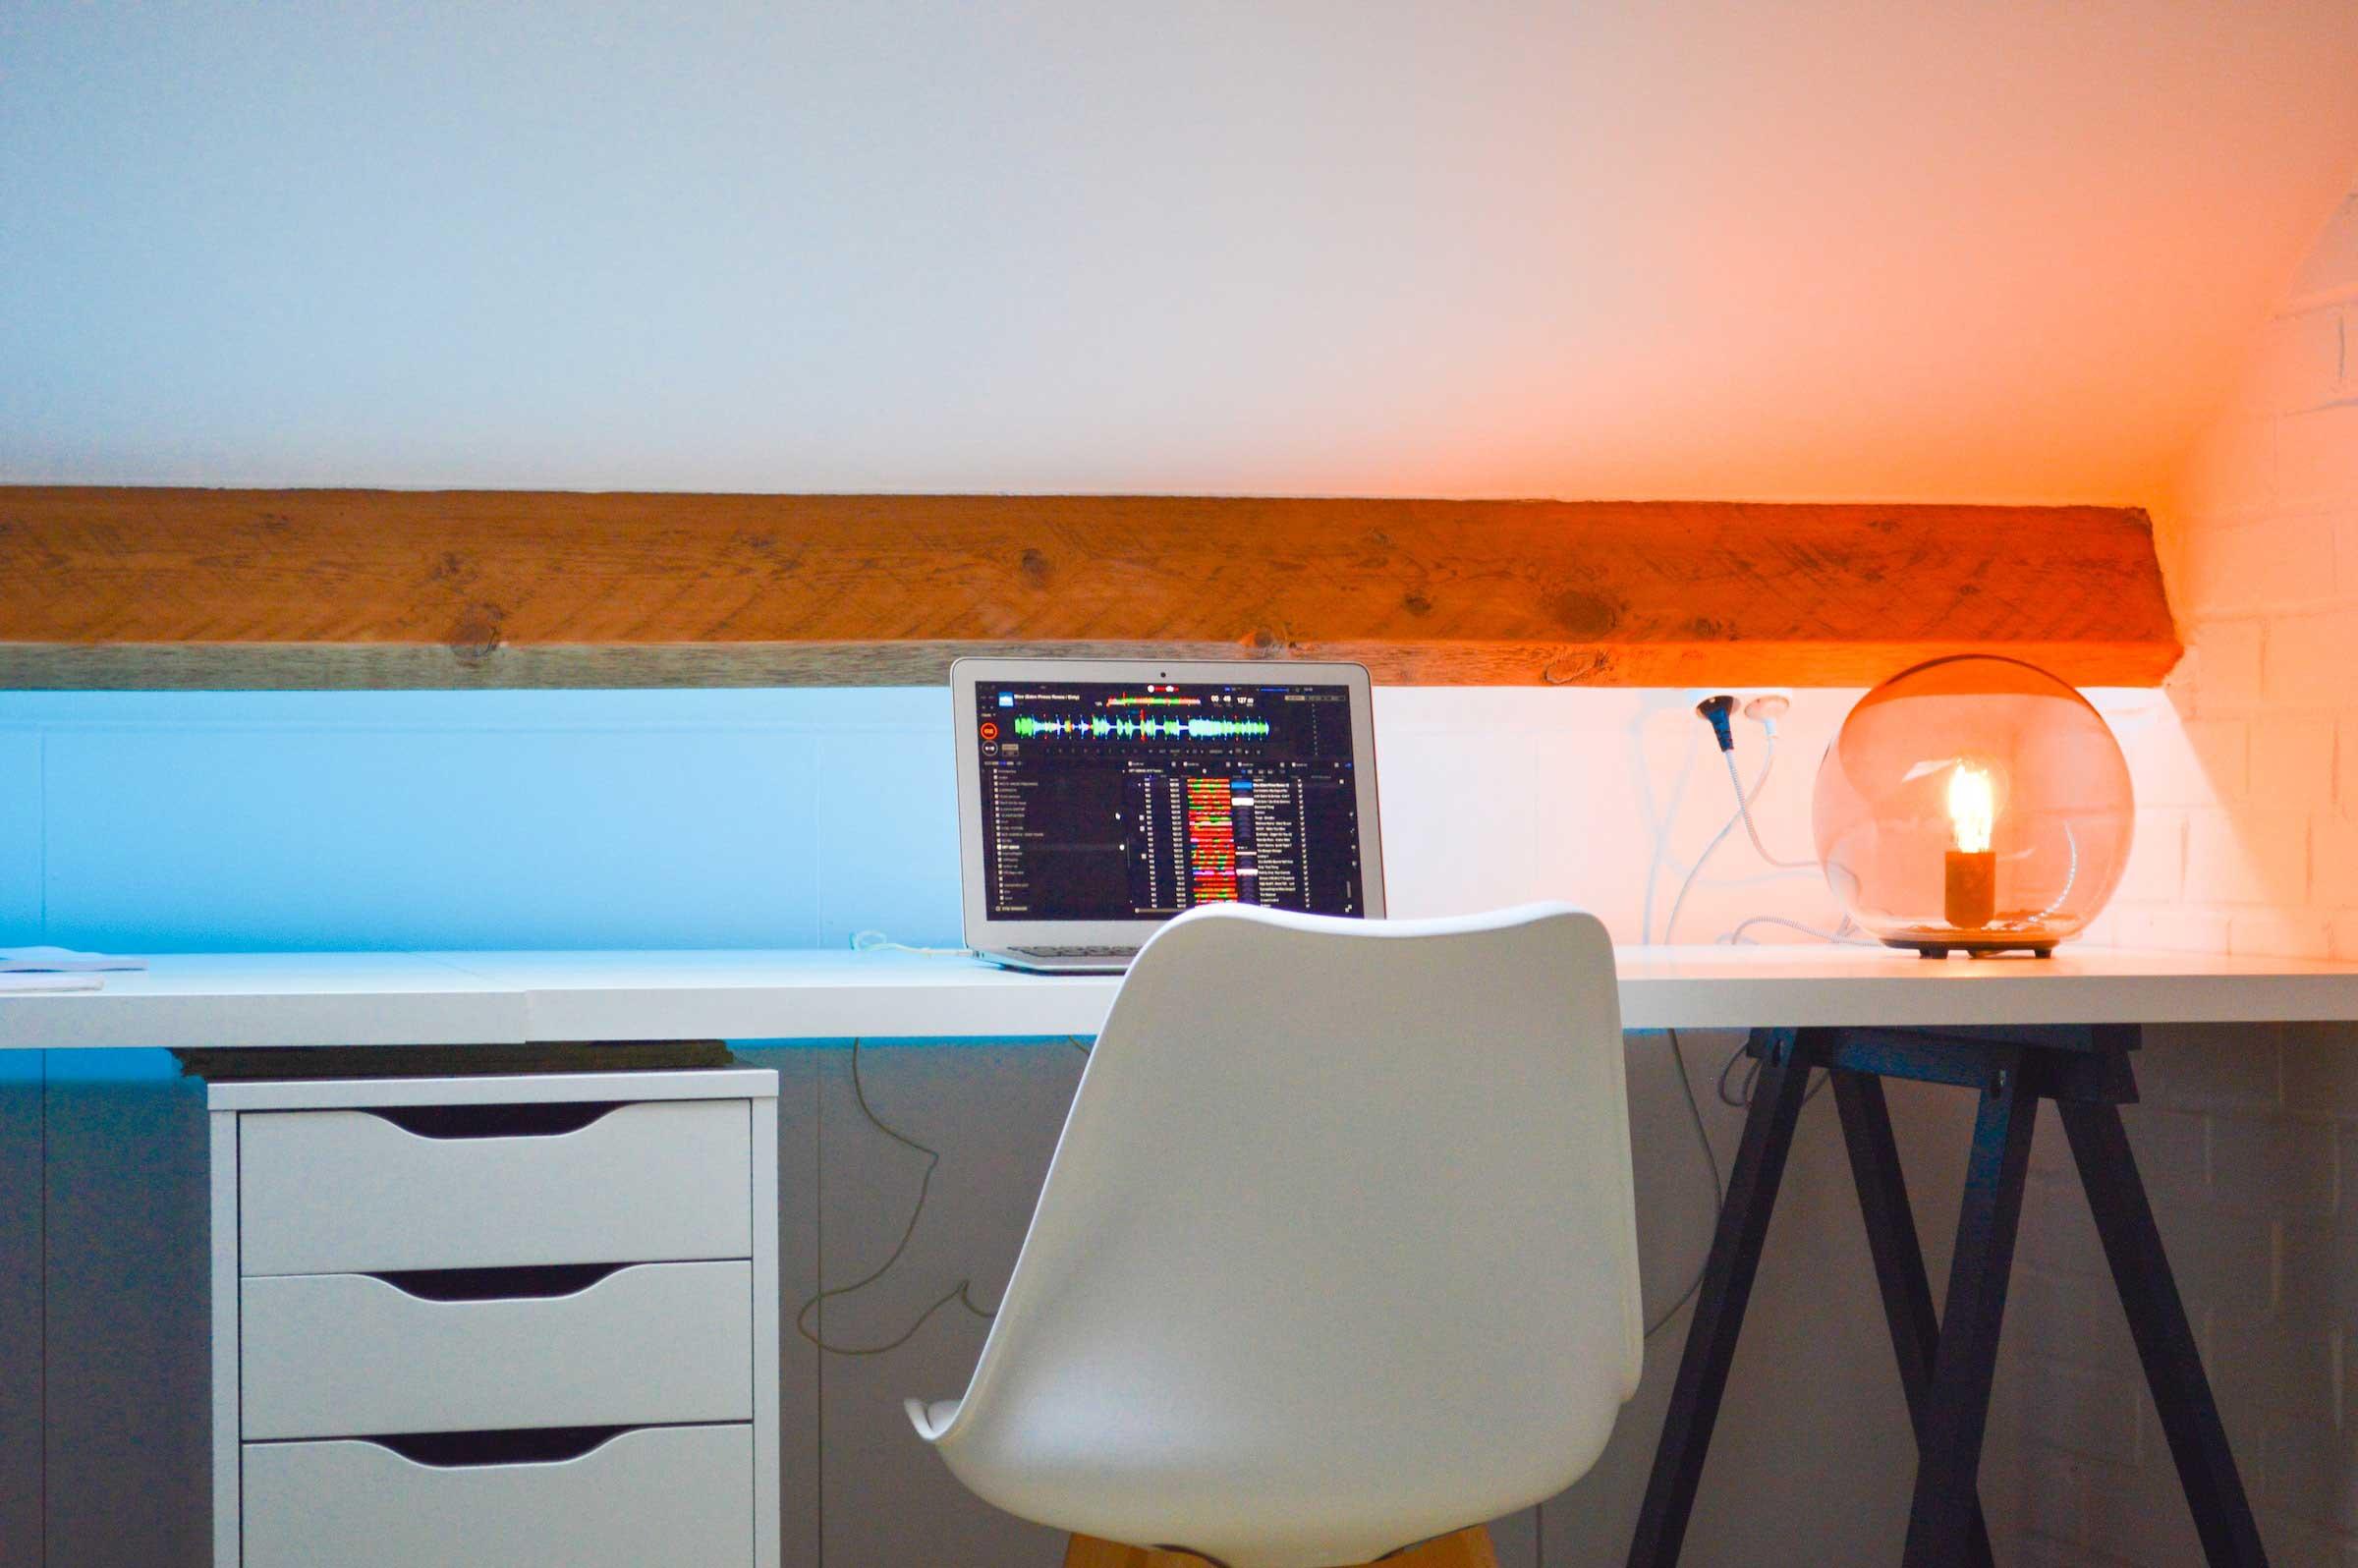 Lowie Vanhoutte Desk Setup Image 1